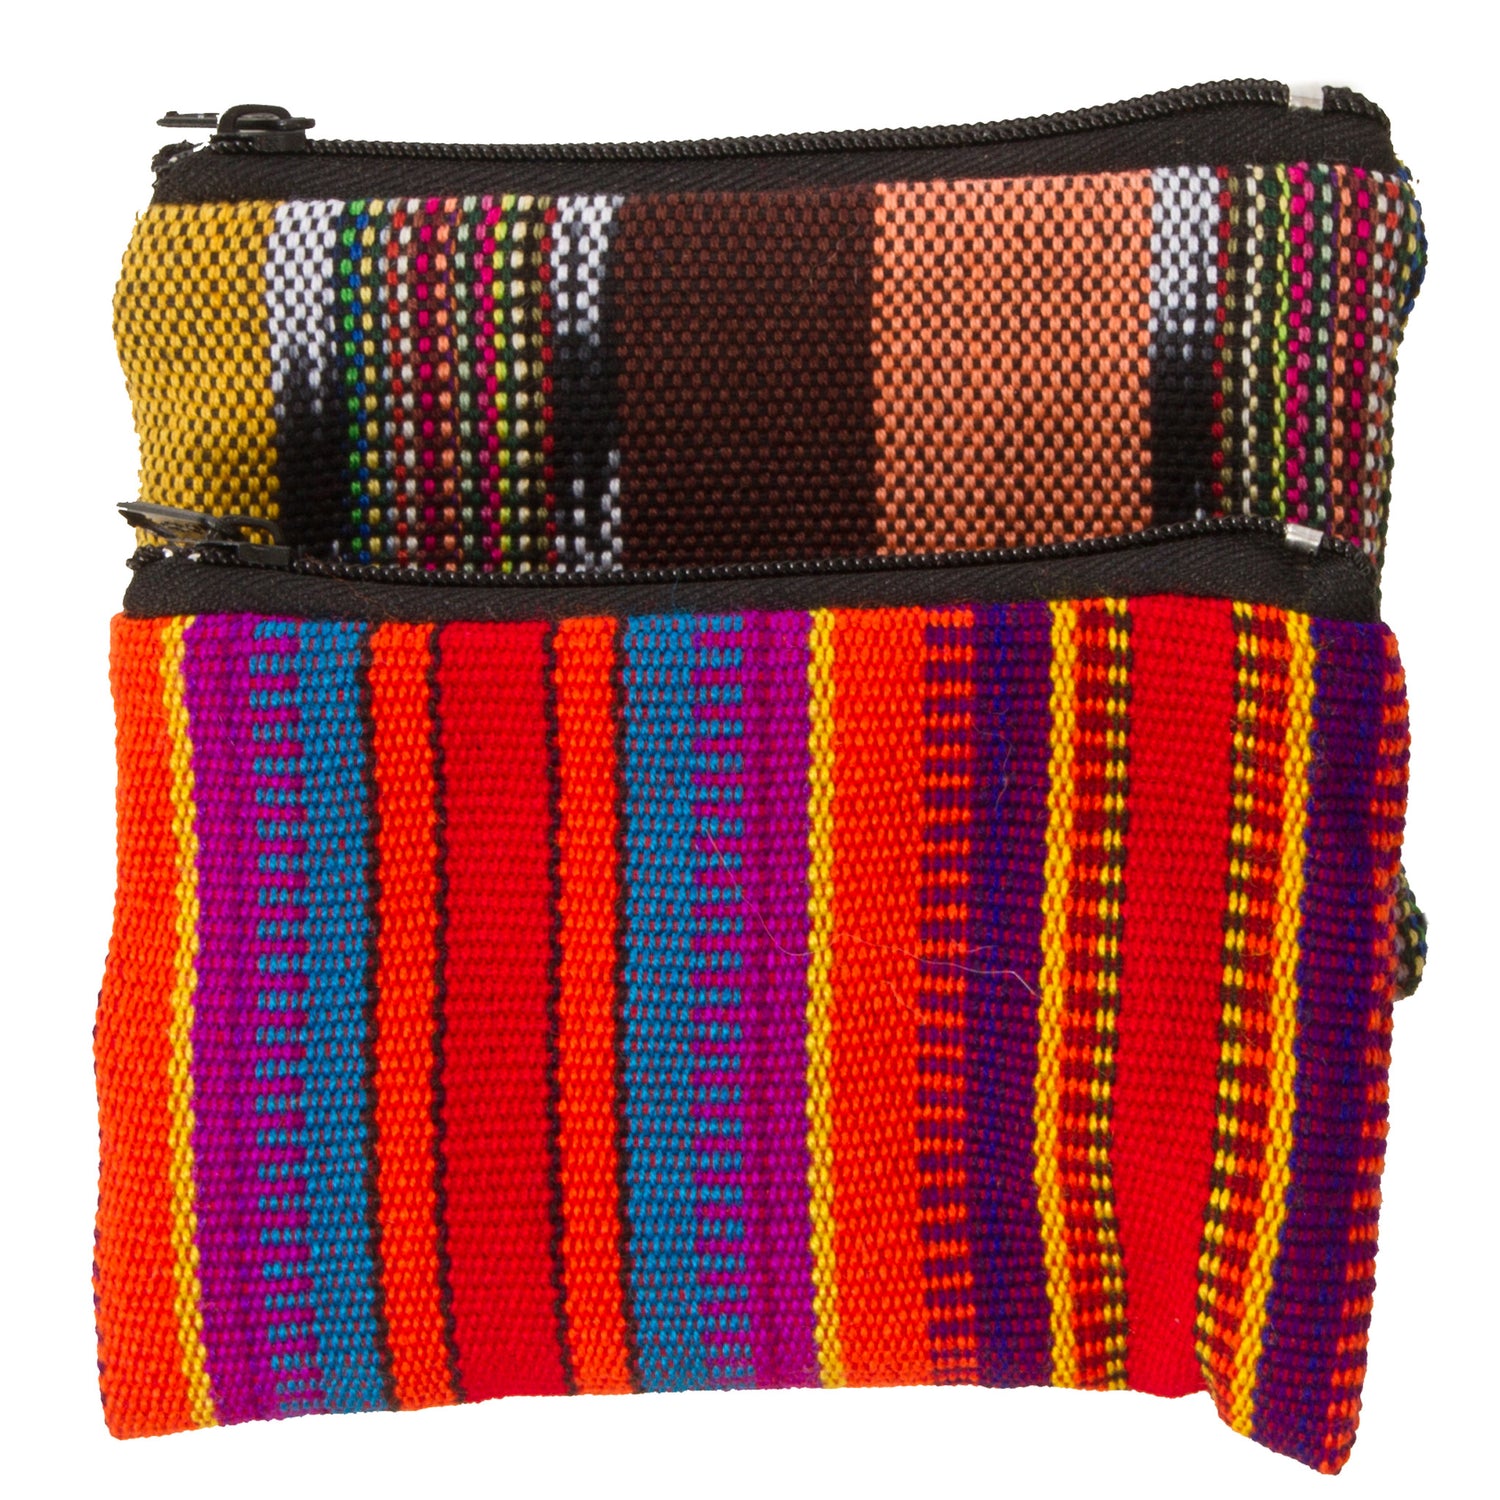 Lucia's World Emporium Fair Trade Handmade Guatemalan Ikat Coin Bag